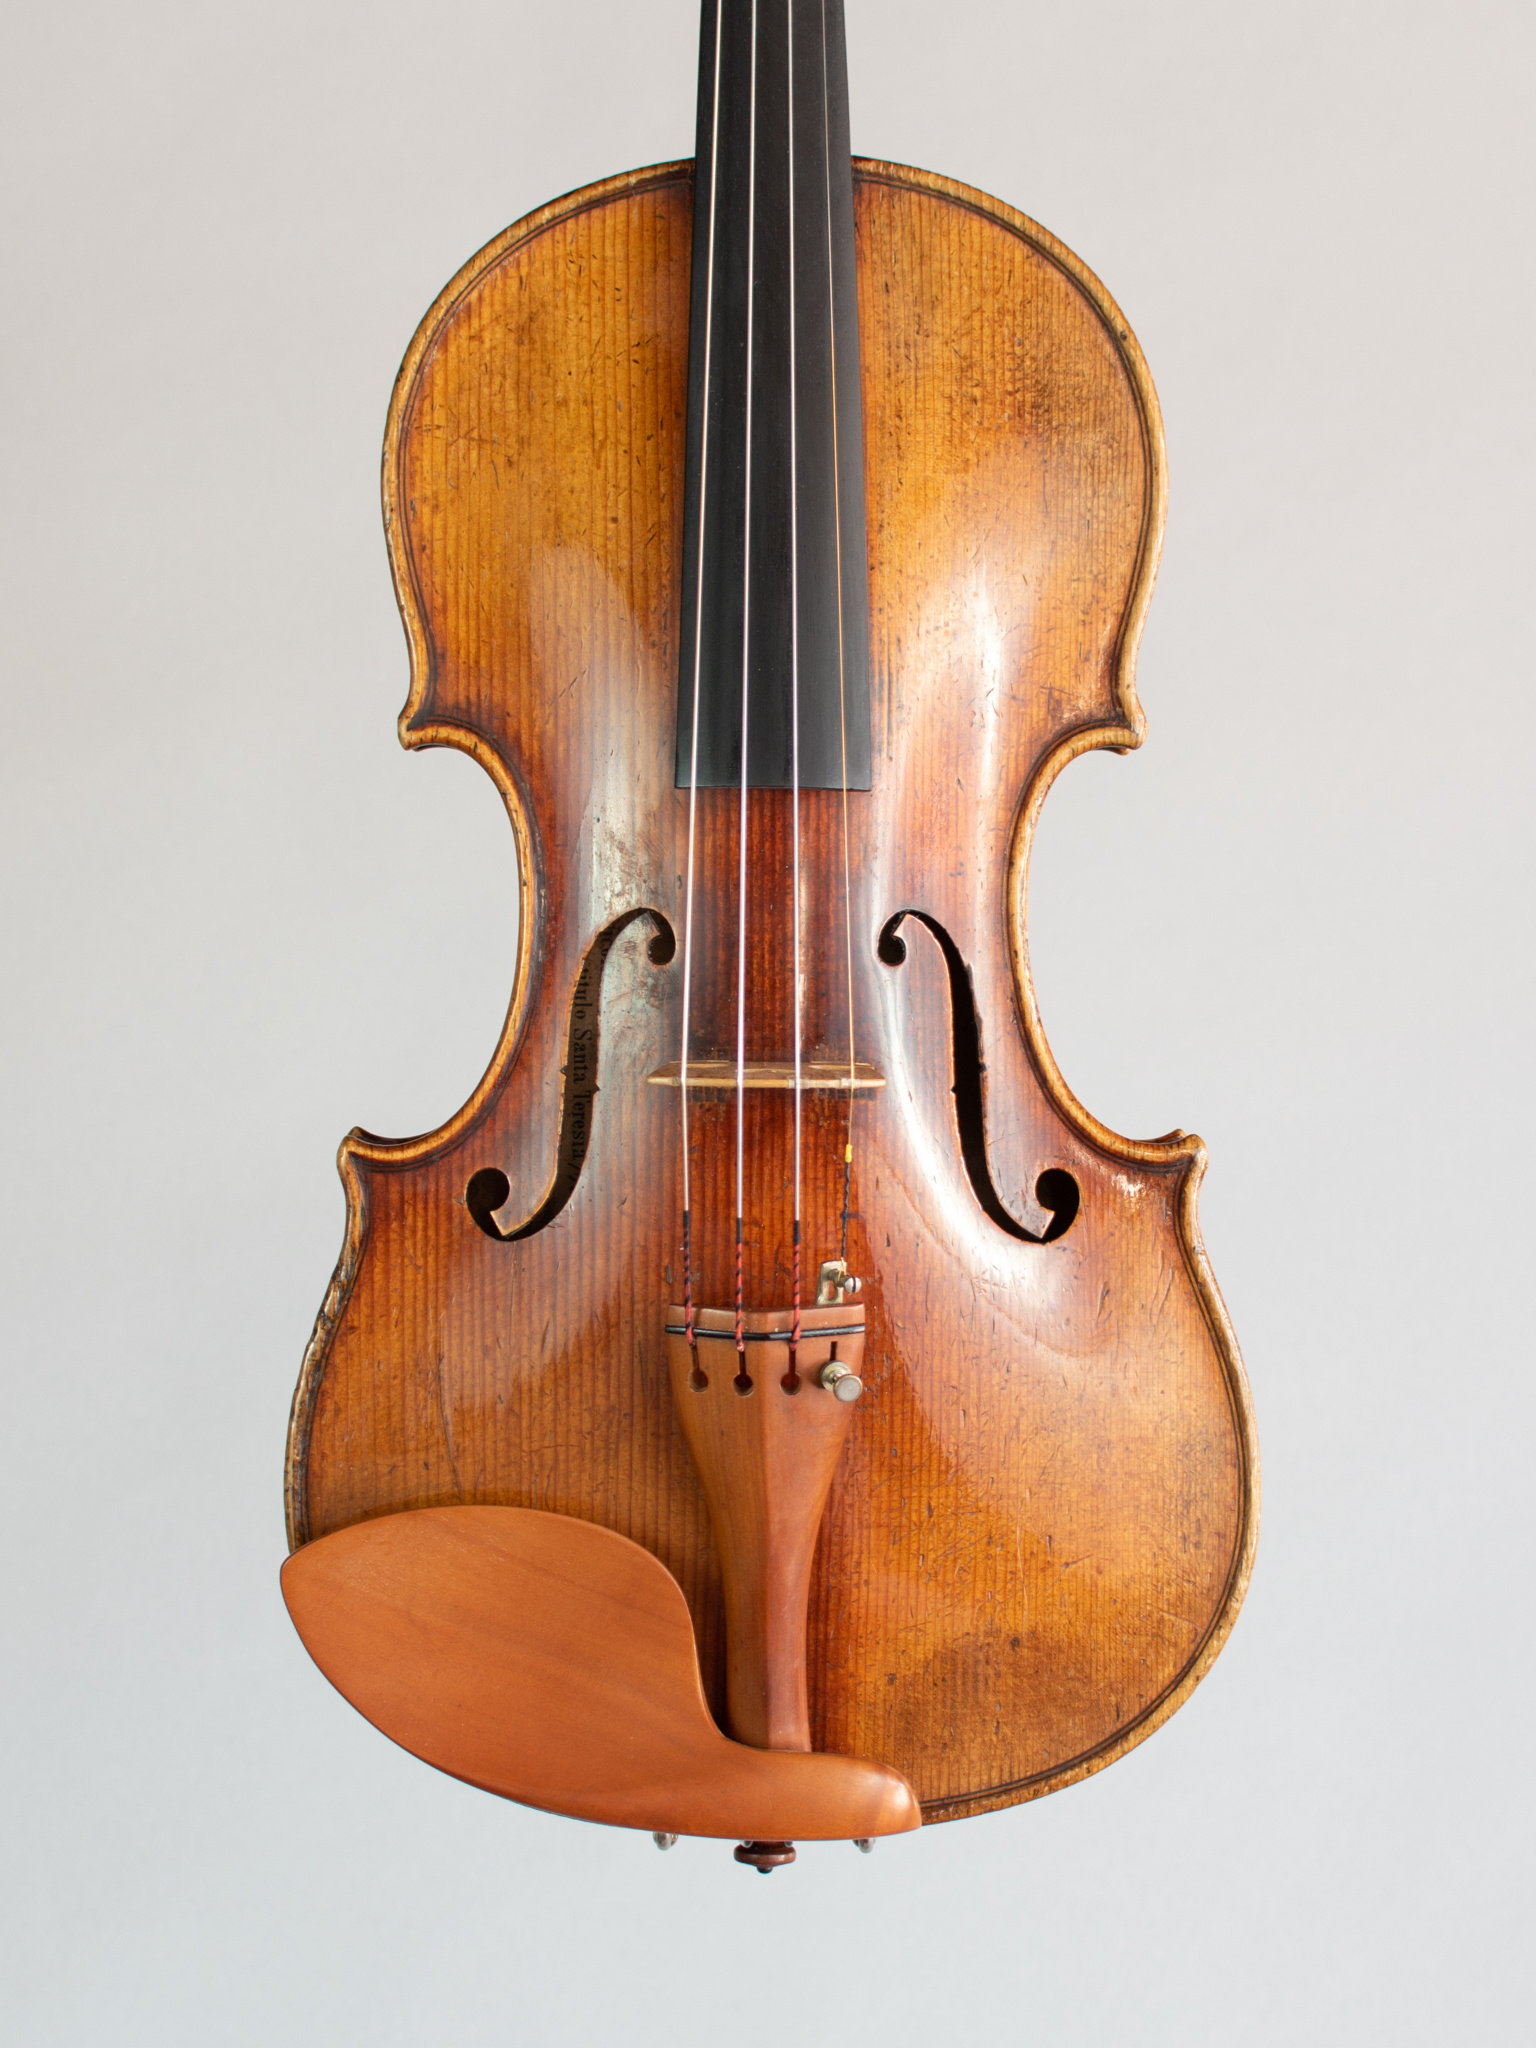 Neuner und Hornsteiner "Nicola Amati Santa Teresa 1728" model violin, Mittenwald, Germany